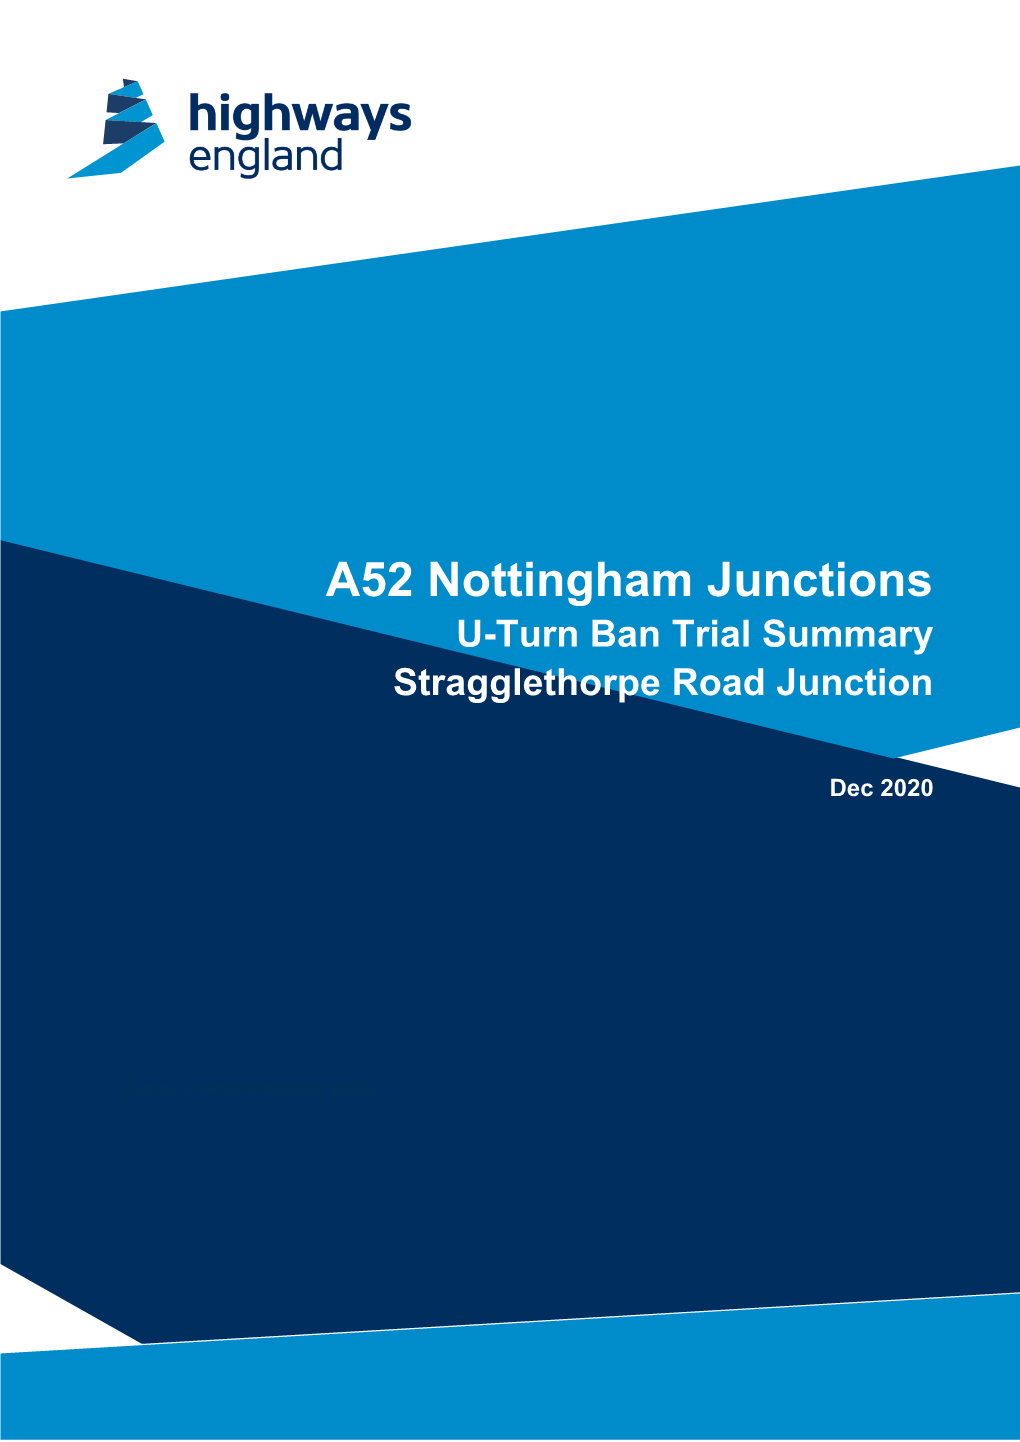 U-Turn Ban Trial Summary Stragglethorpe Road Junction